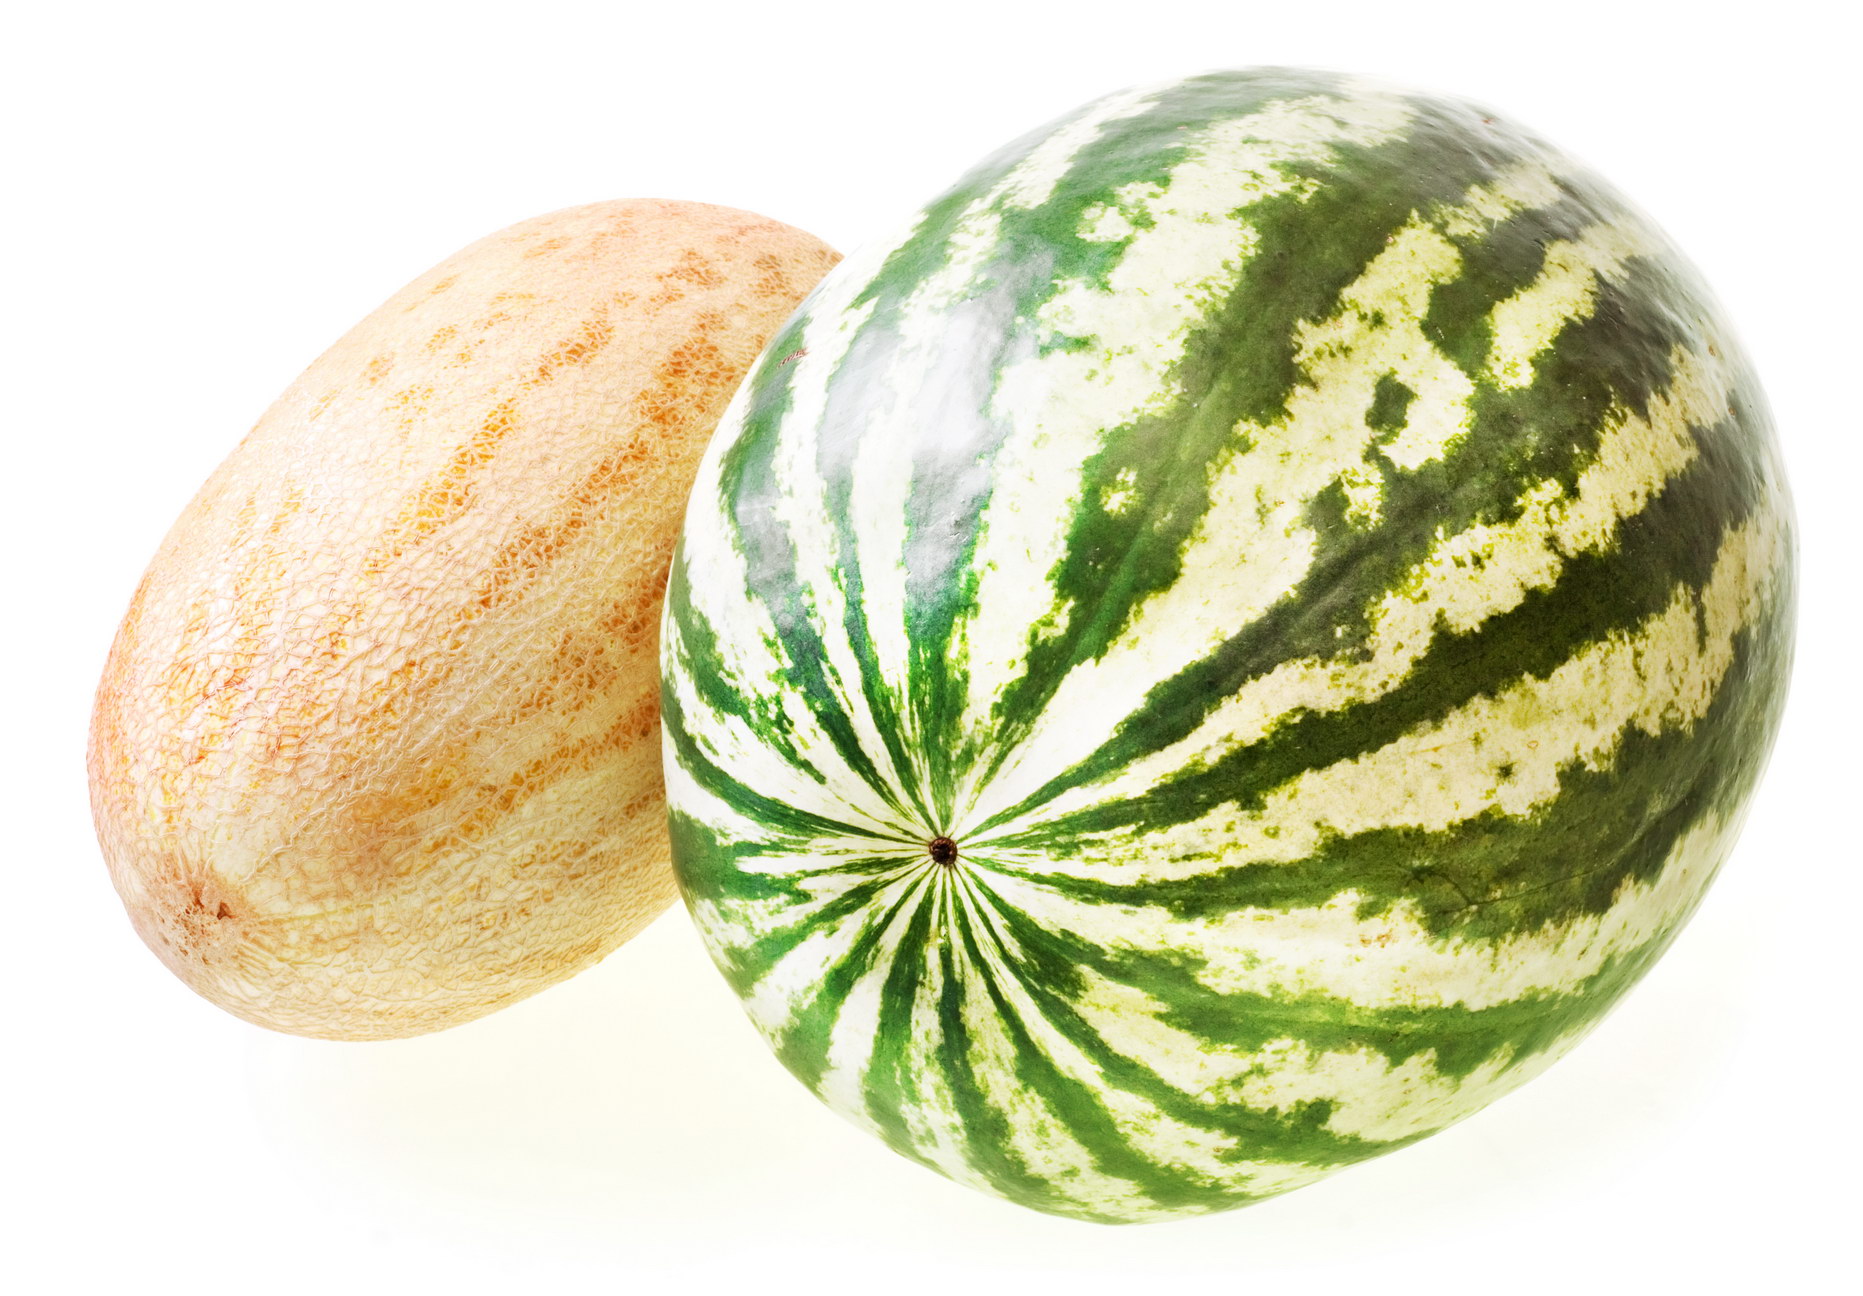 Melon and watermelon photo